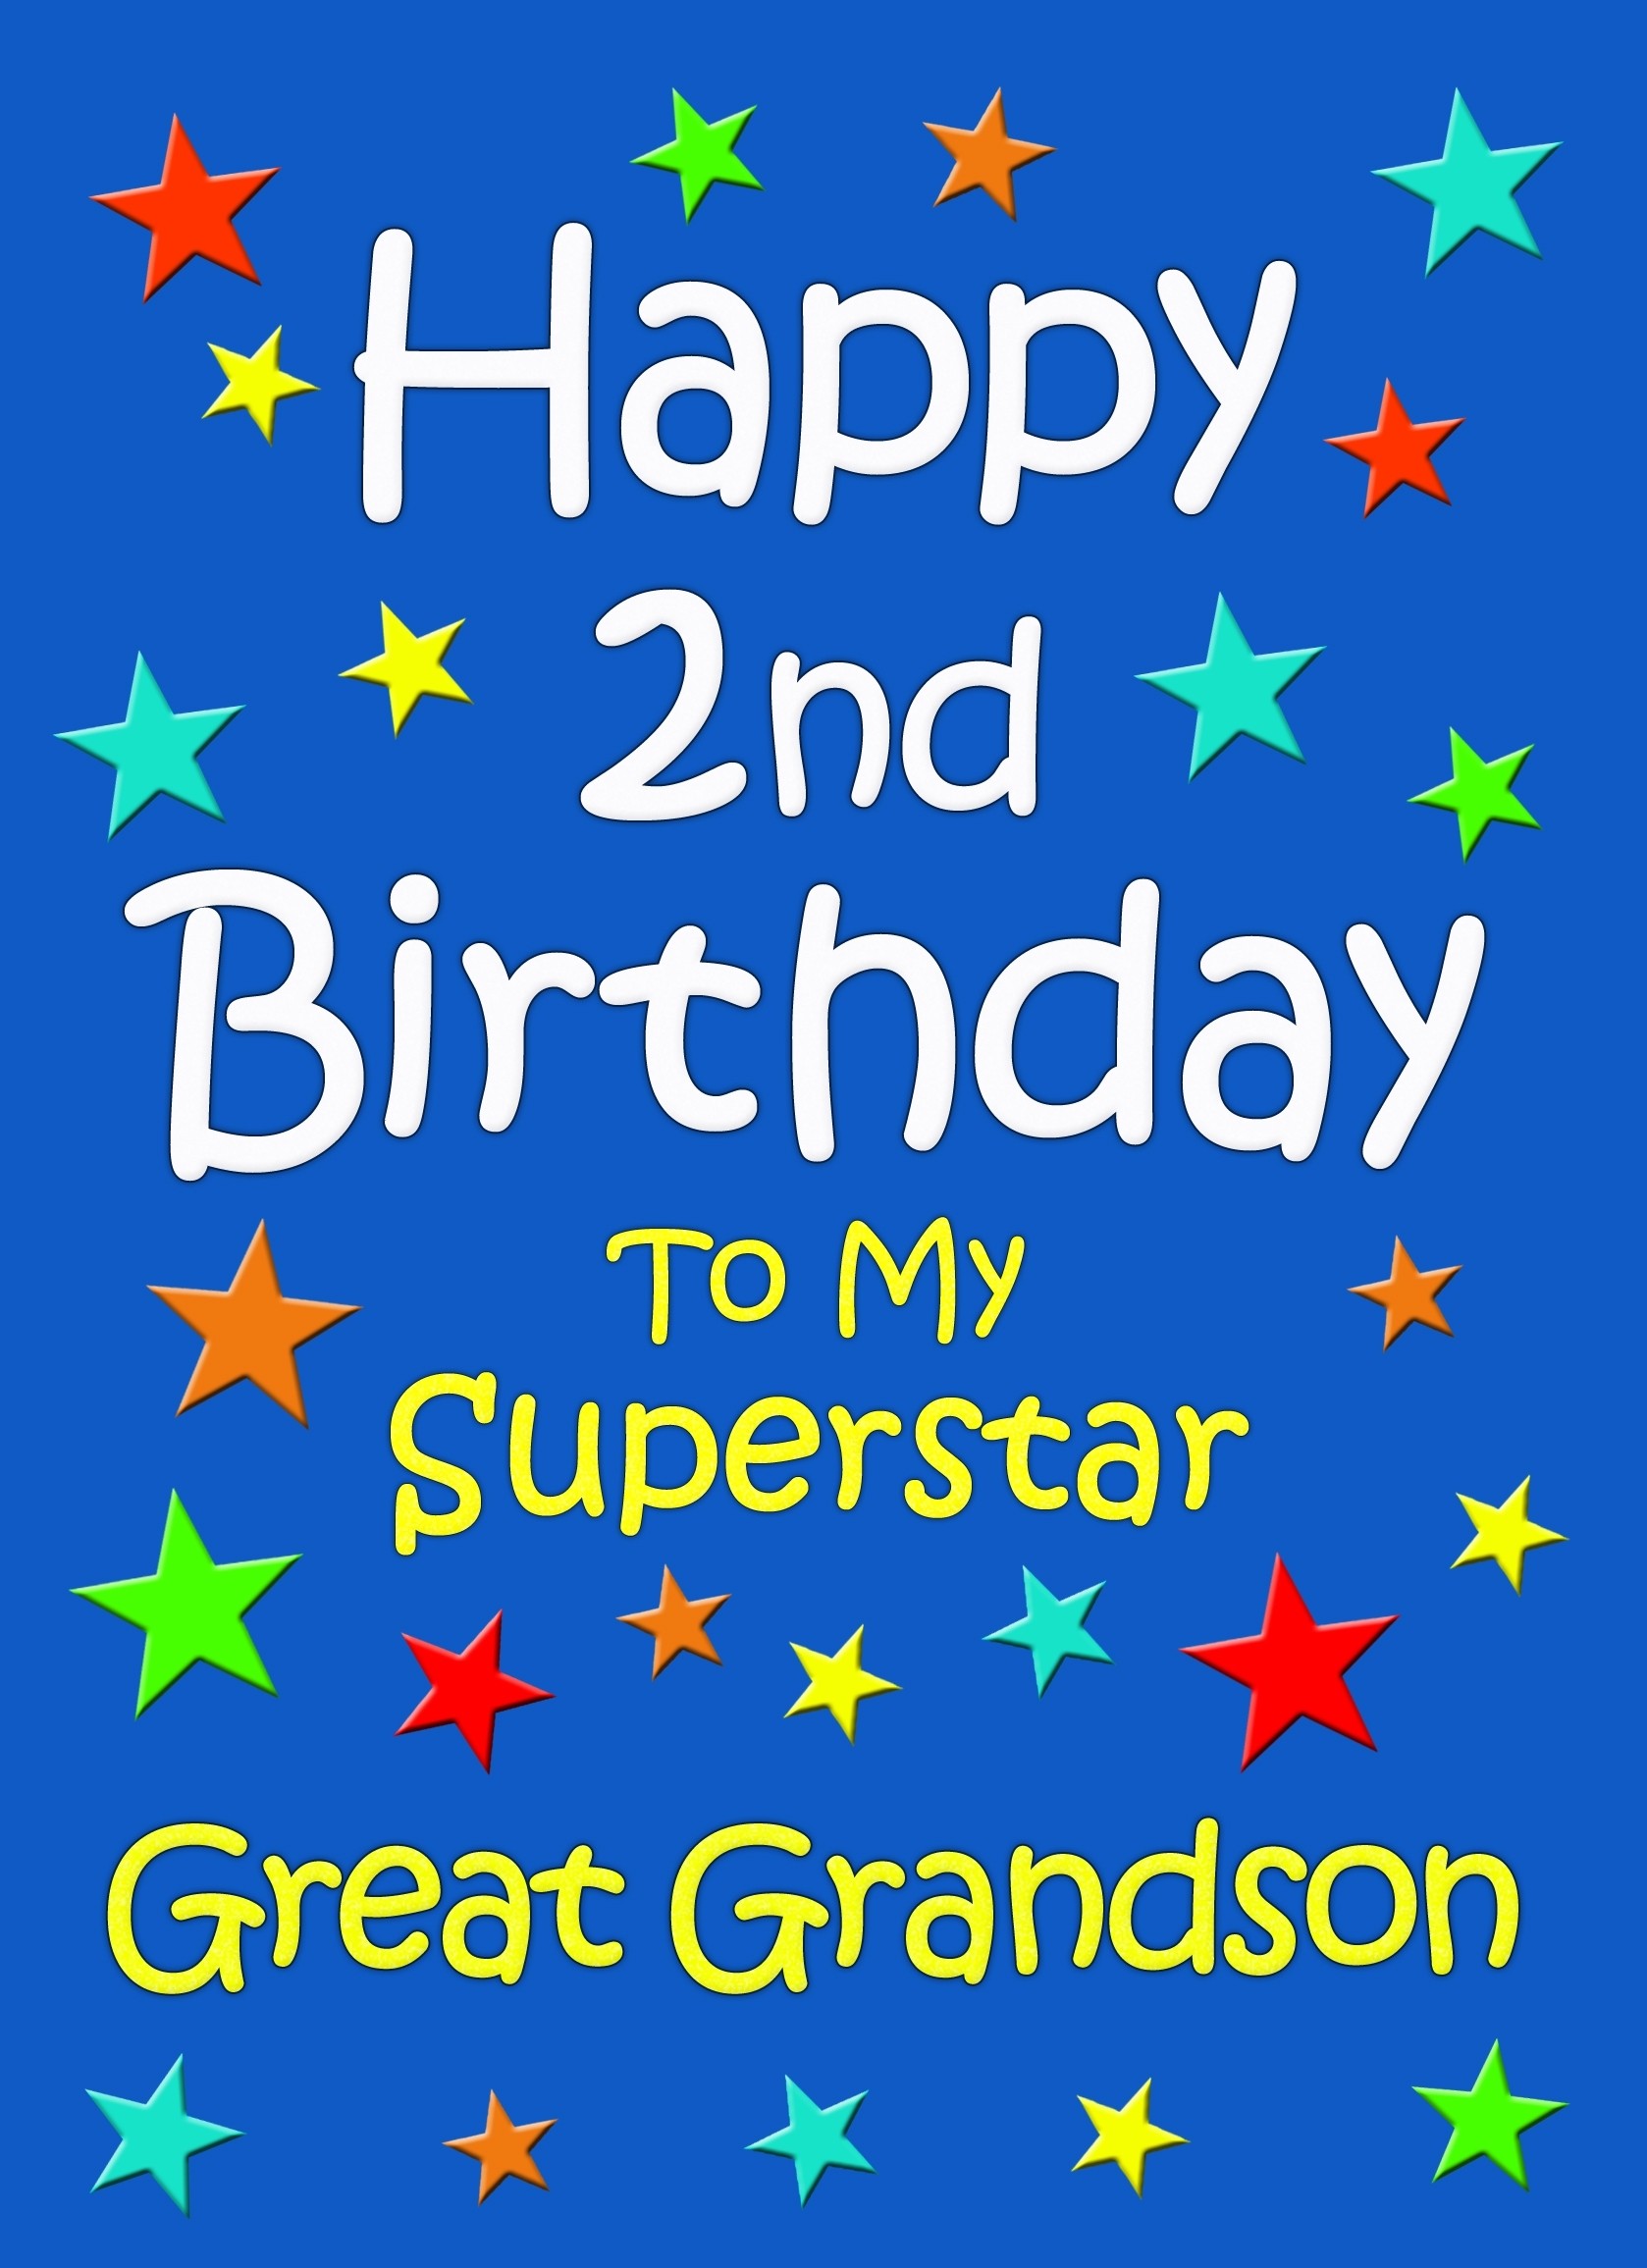 Great Grandson 2nd Birthday Card (Blue)